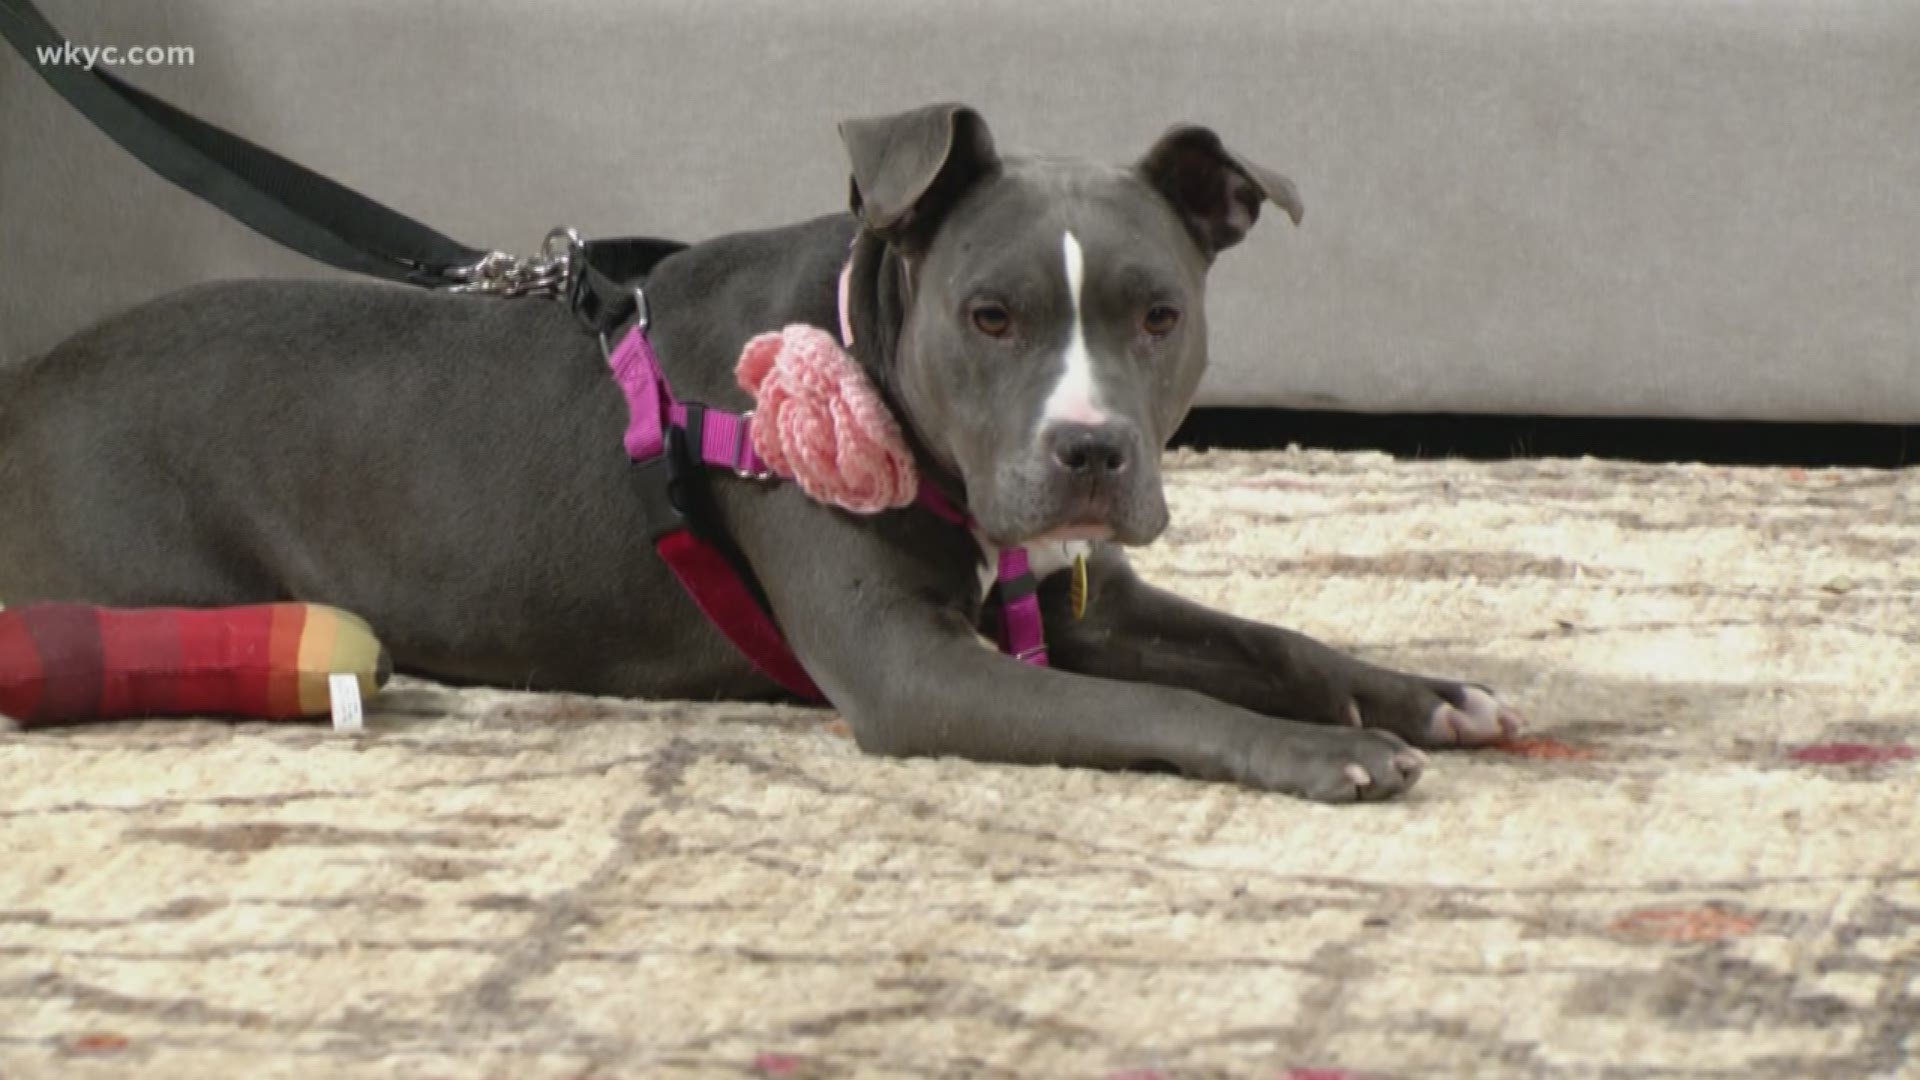 Adopt-A-Pet: Meet Zahara, City Dogs